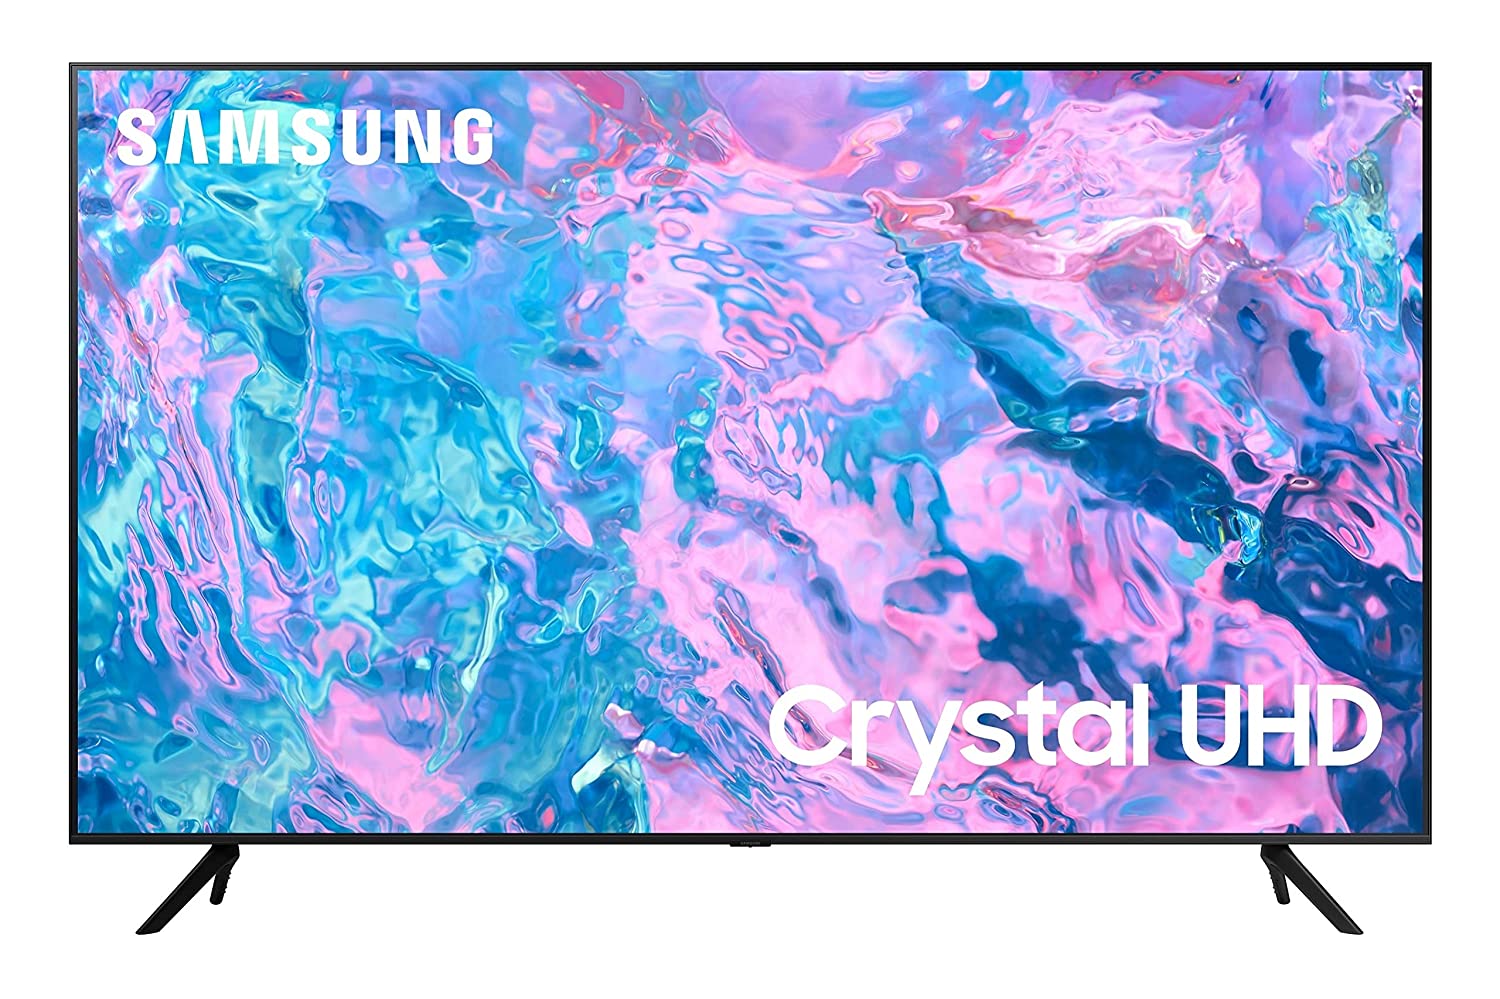 Samsung 138 cm (55 inches) Crystal iSmart 4K Ultra HD Smart LED TV